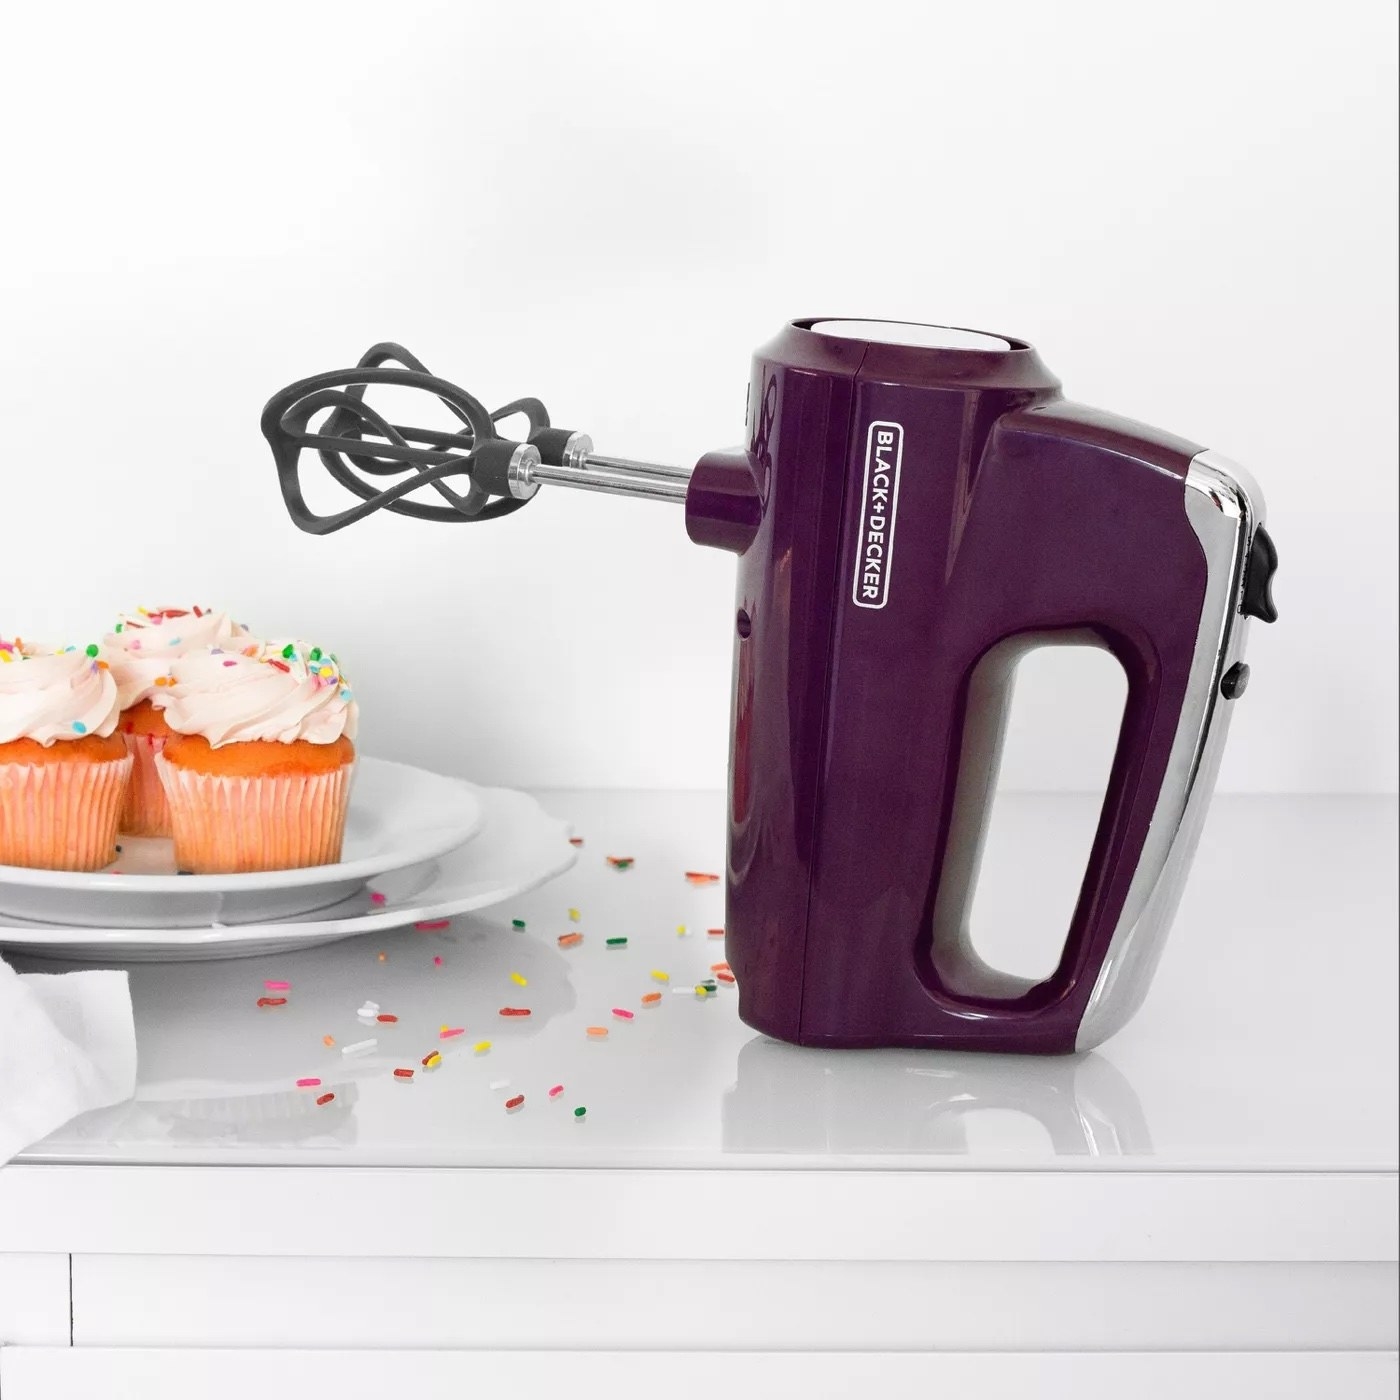 the purple mixer next to cupcakes